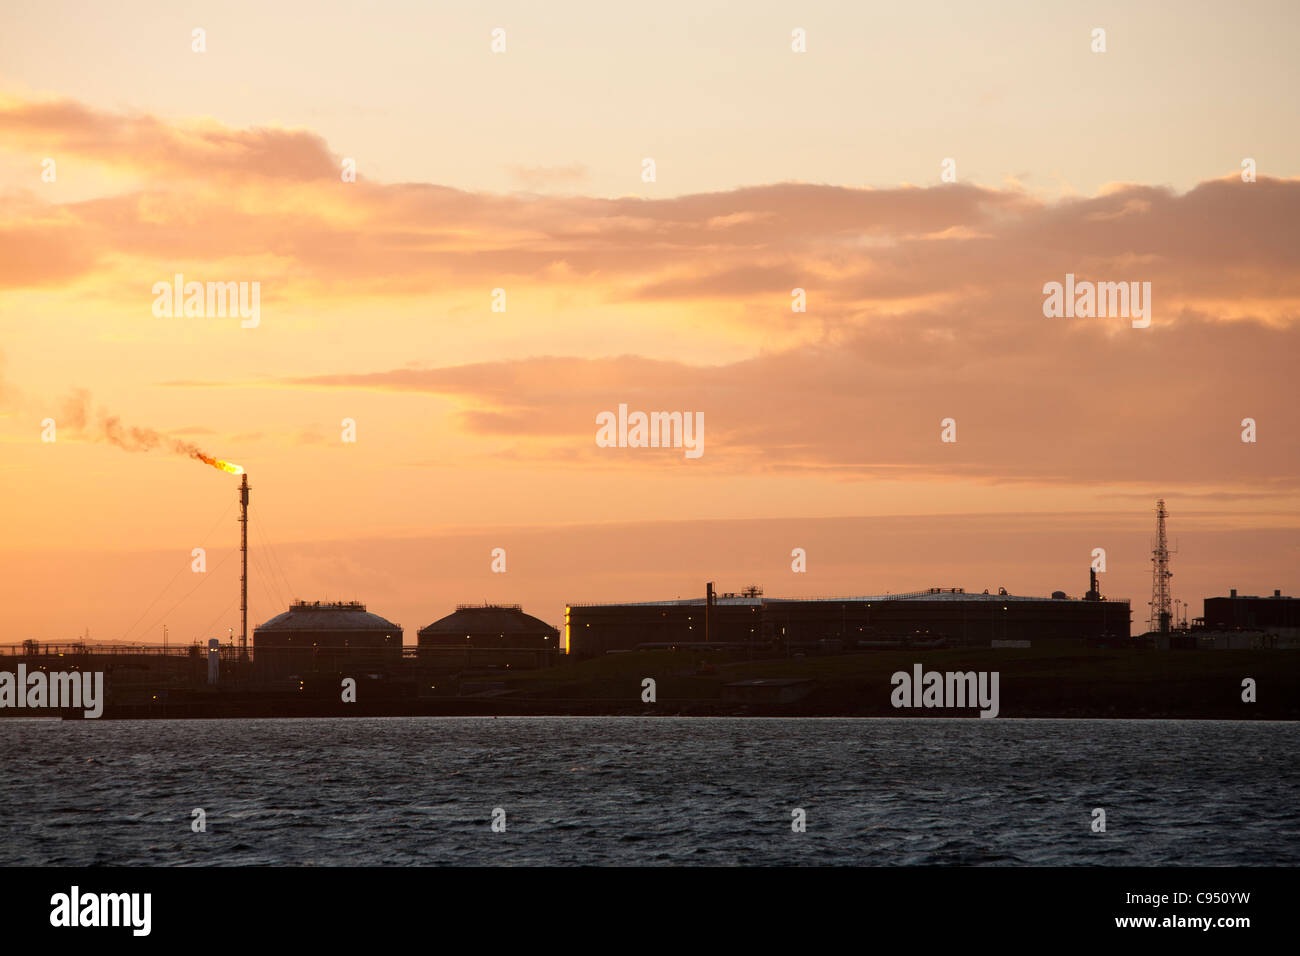 The Flotta oil terminal on the Island of Flotta in the Orkney's Scotland, UK. 1 Stock Photo